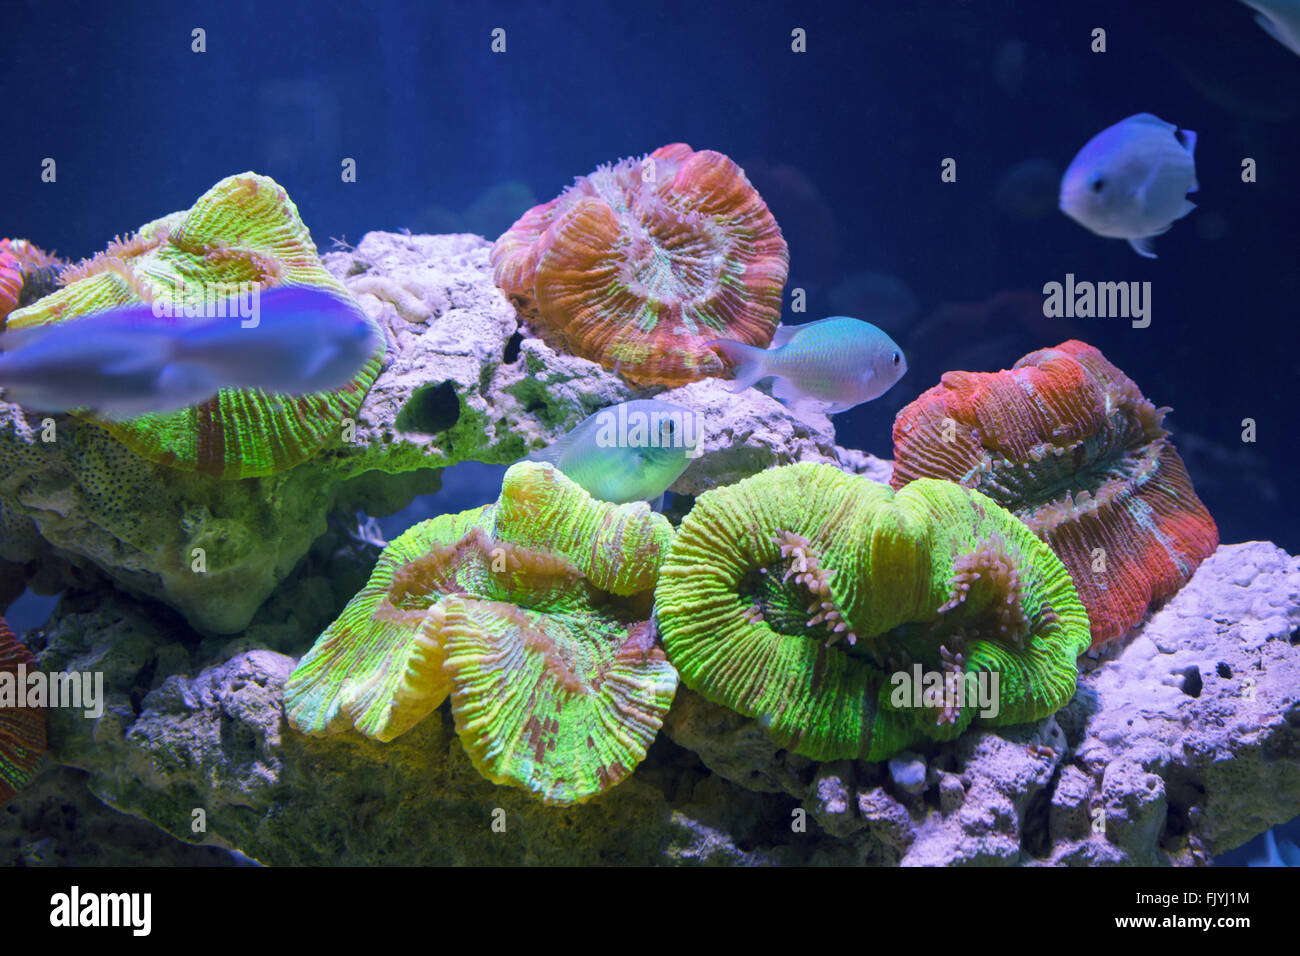 Beautiful underwater world with tropical fish Stock Photo